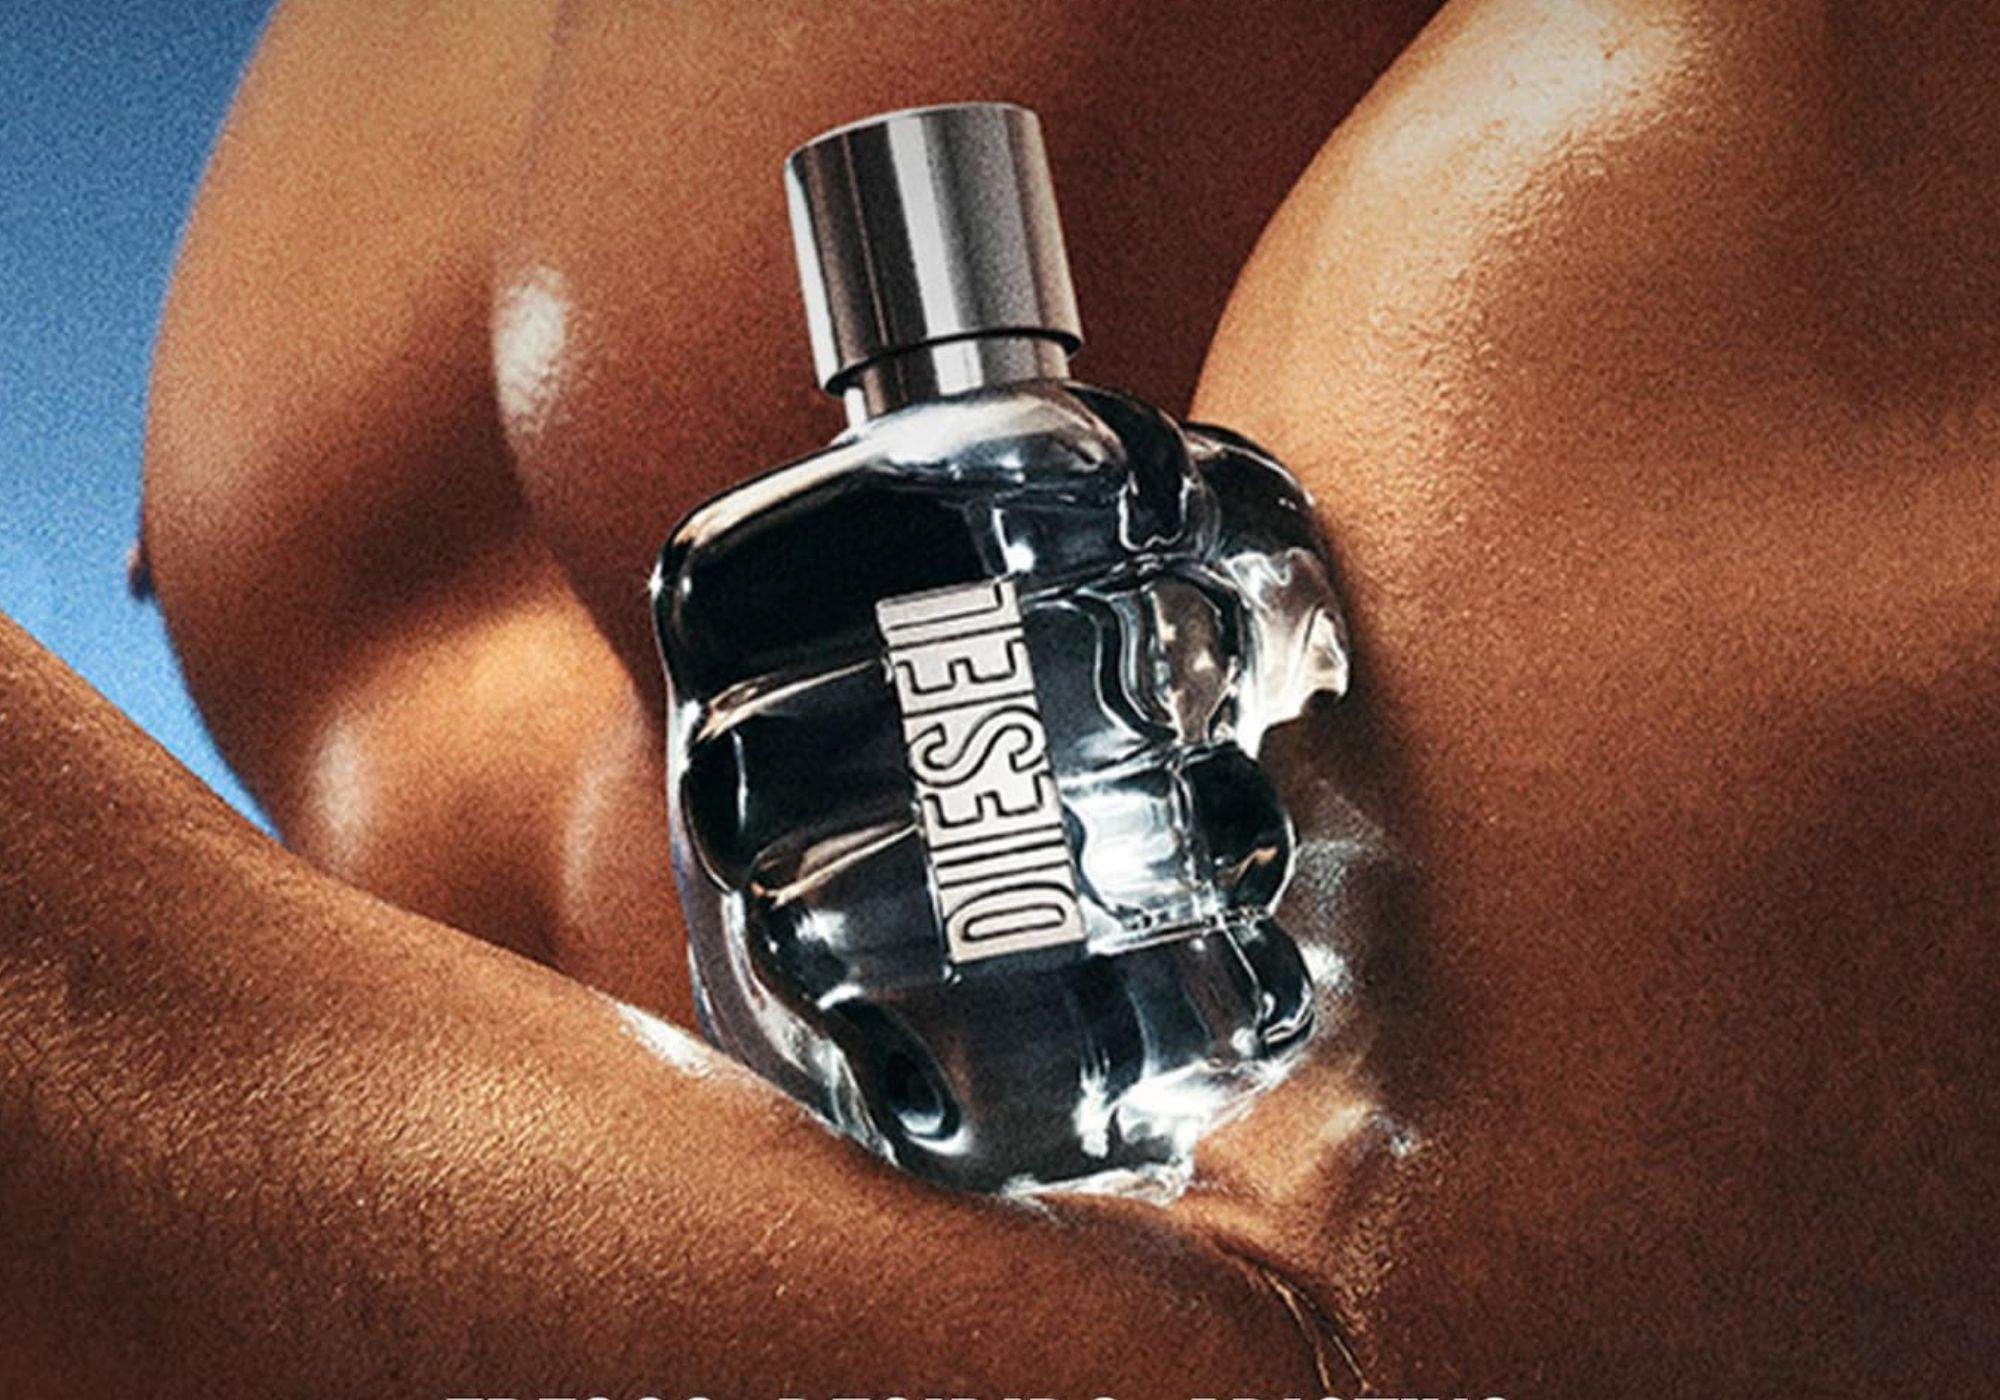 Diesel Only the Brave: El perfum que defineix la valentia, ara amb un 52% de descompte a Amazon